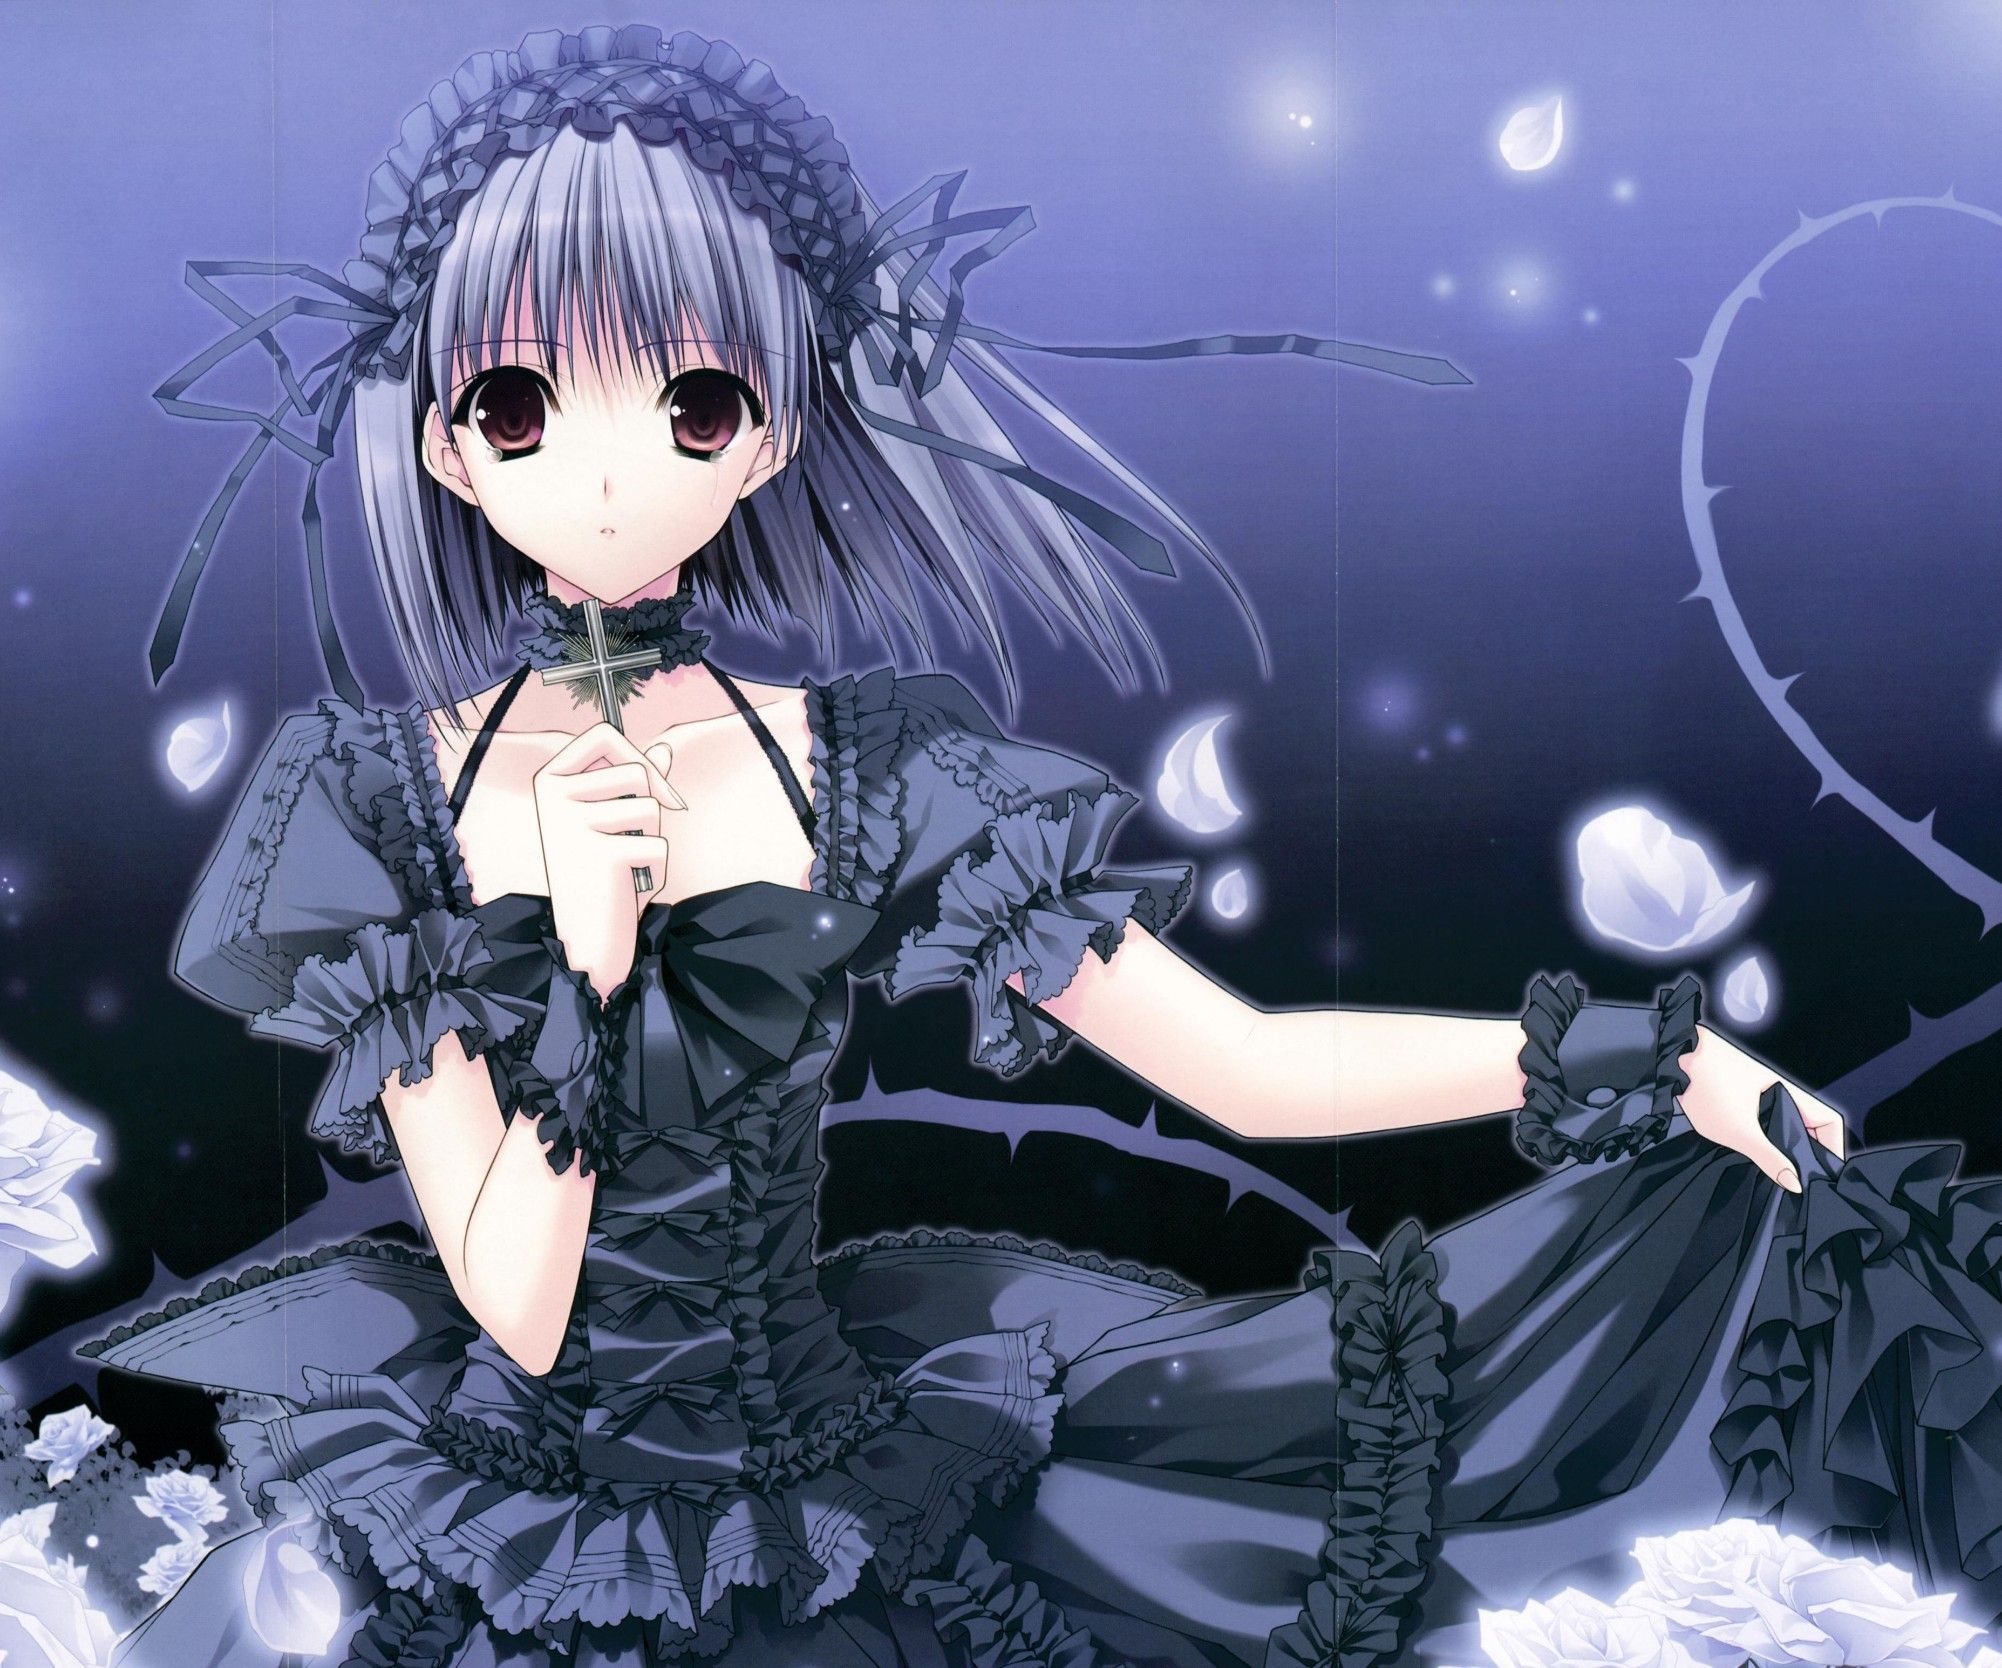 Anime girl in a black dress - Animecore